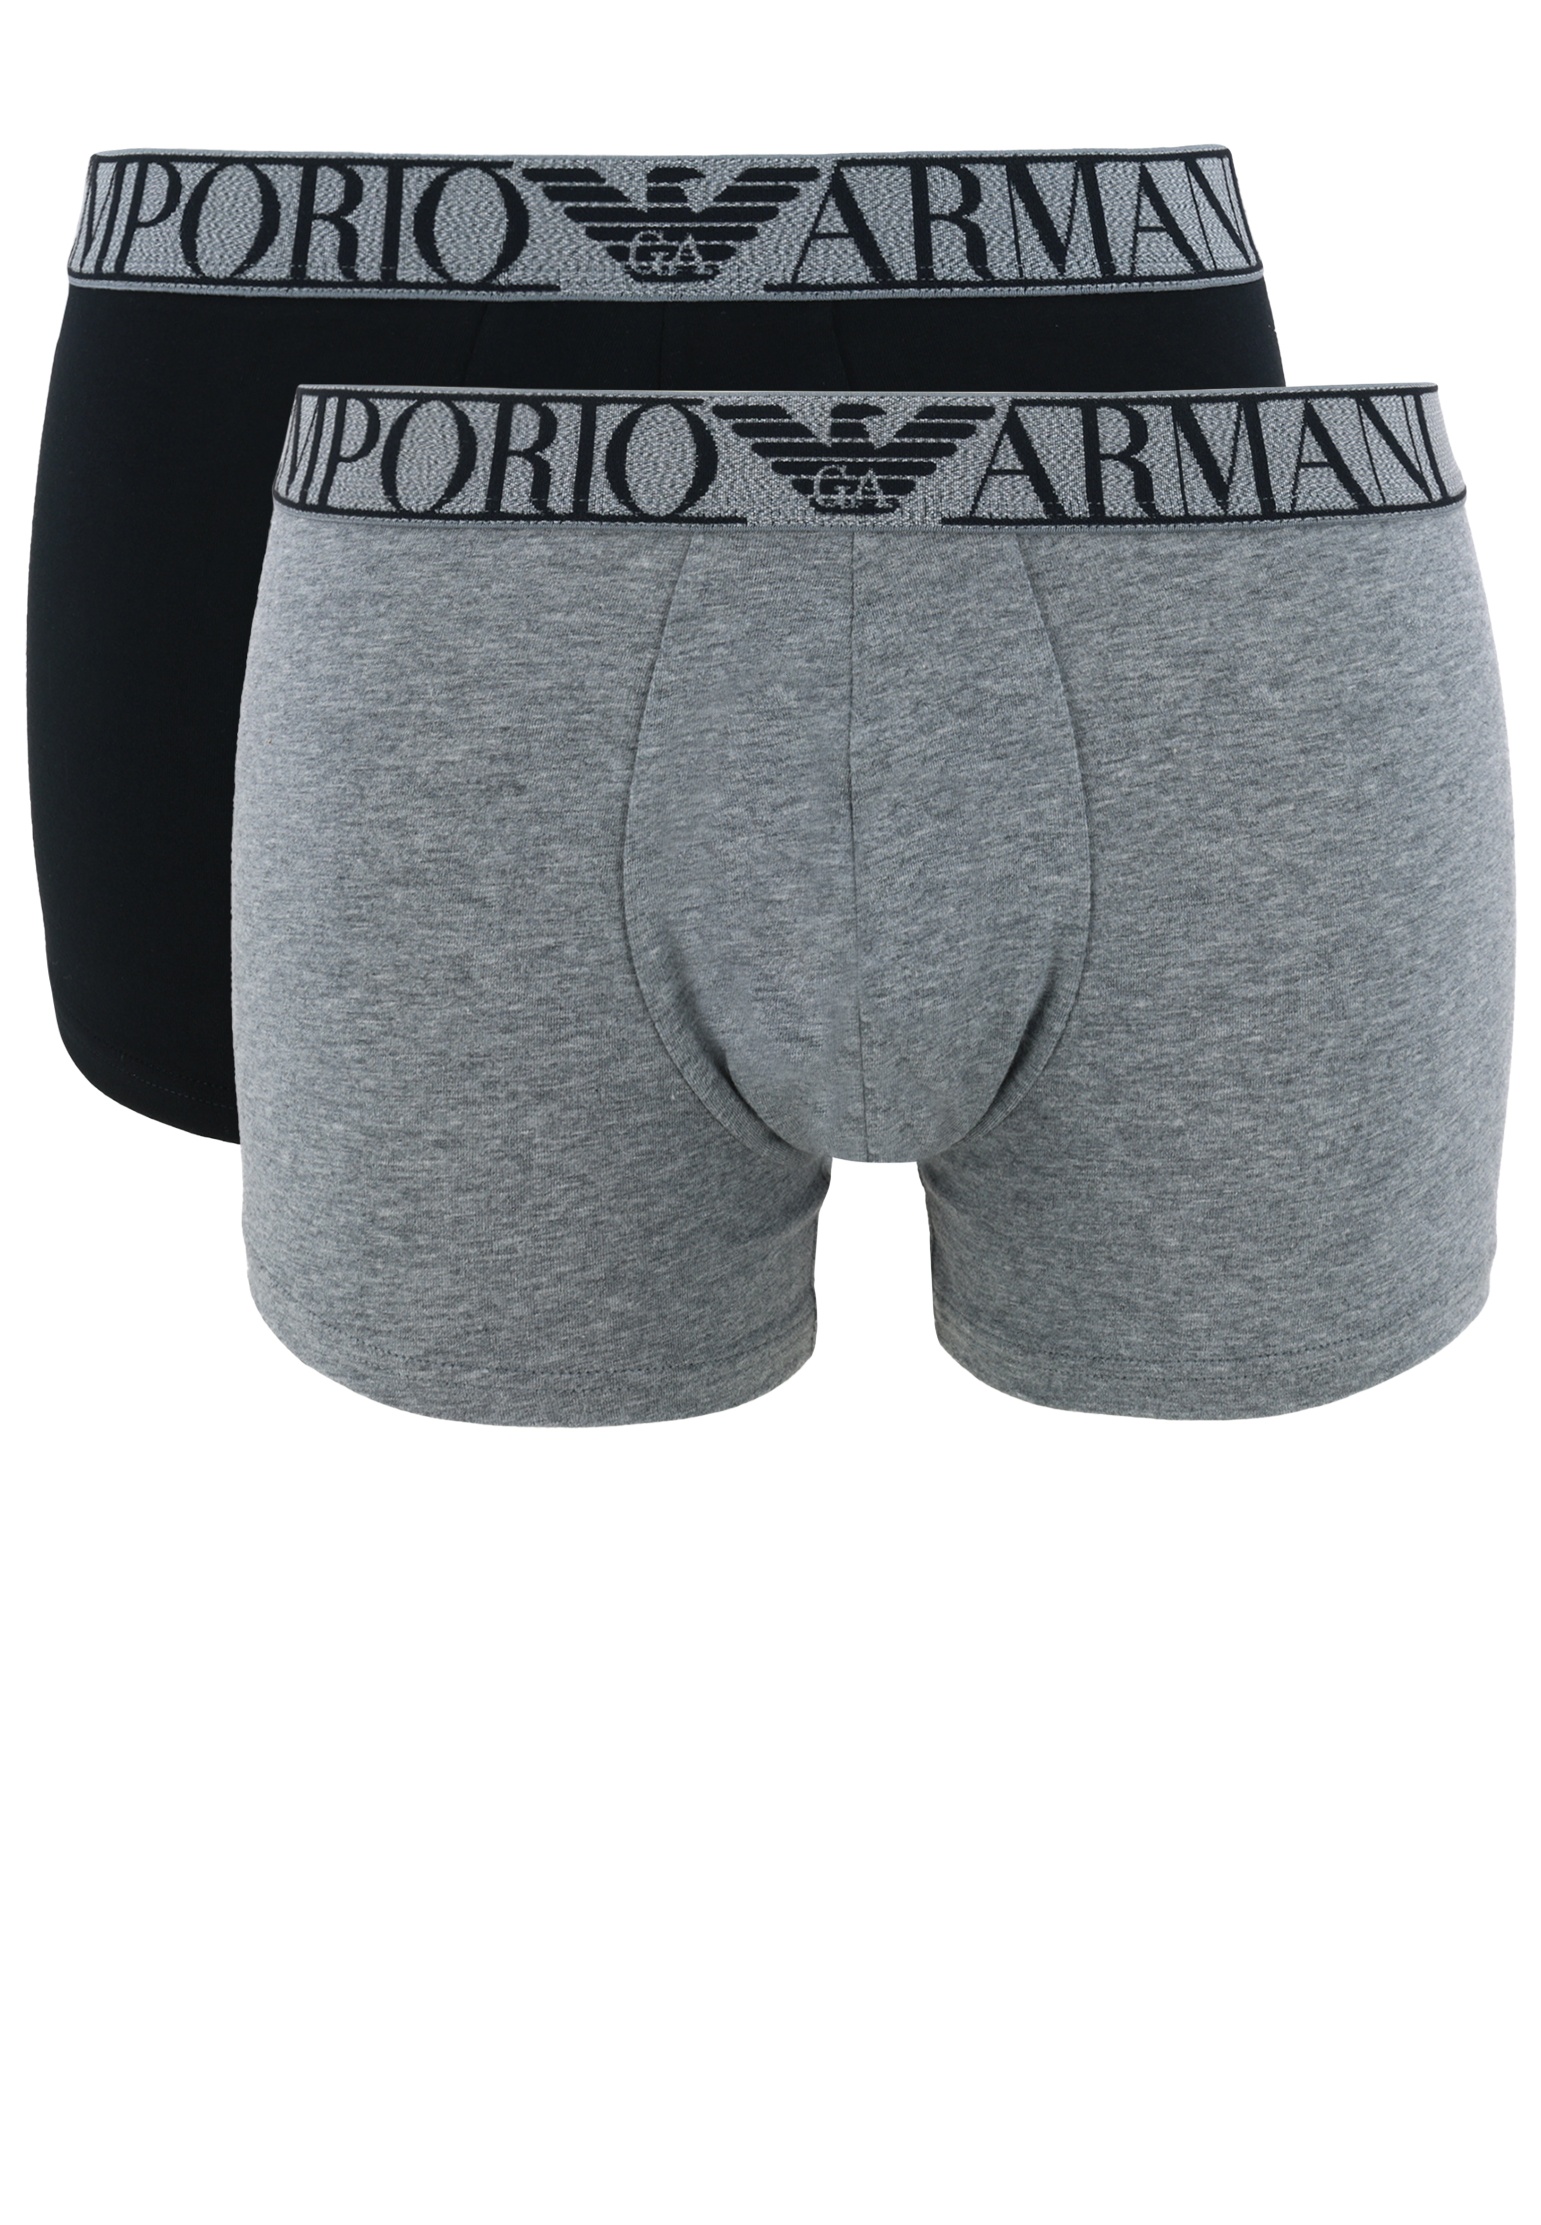 Комплект EMPORIO ARMANI Underwear Серый, размер M 149038 - фото 1